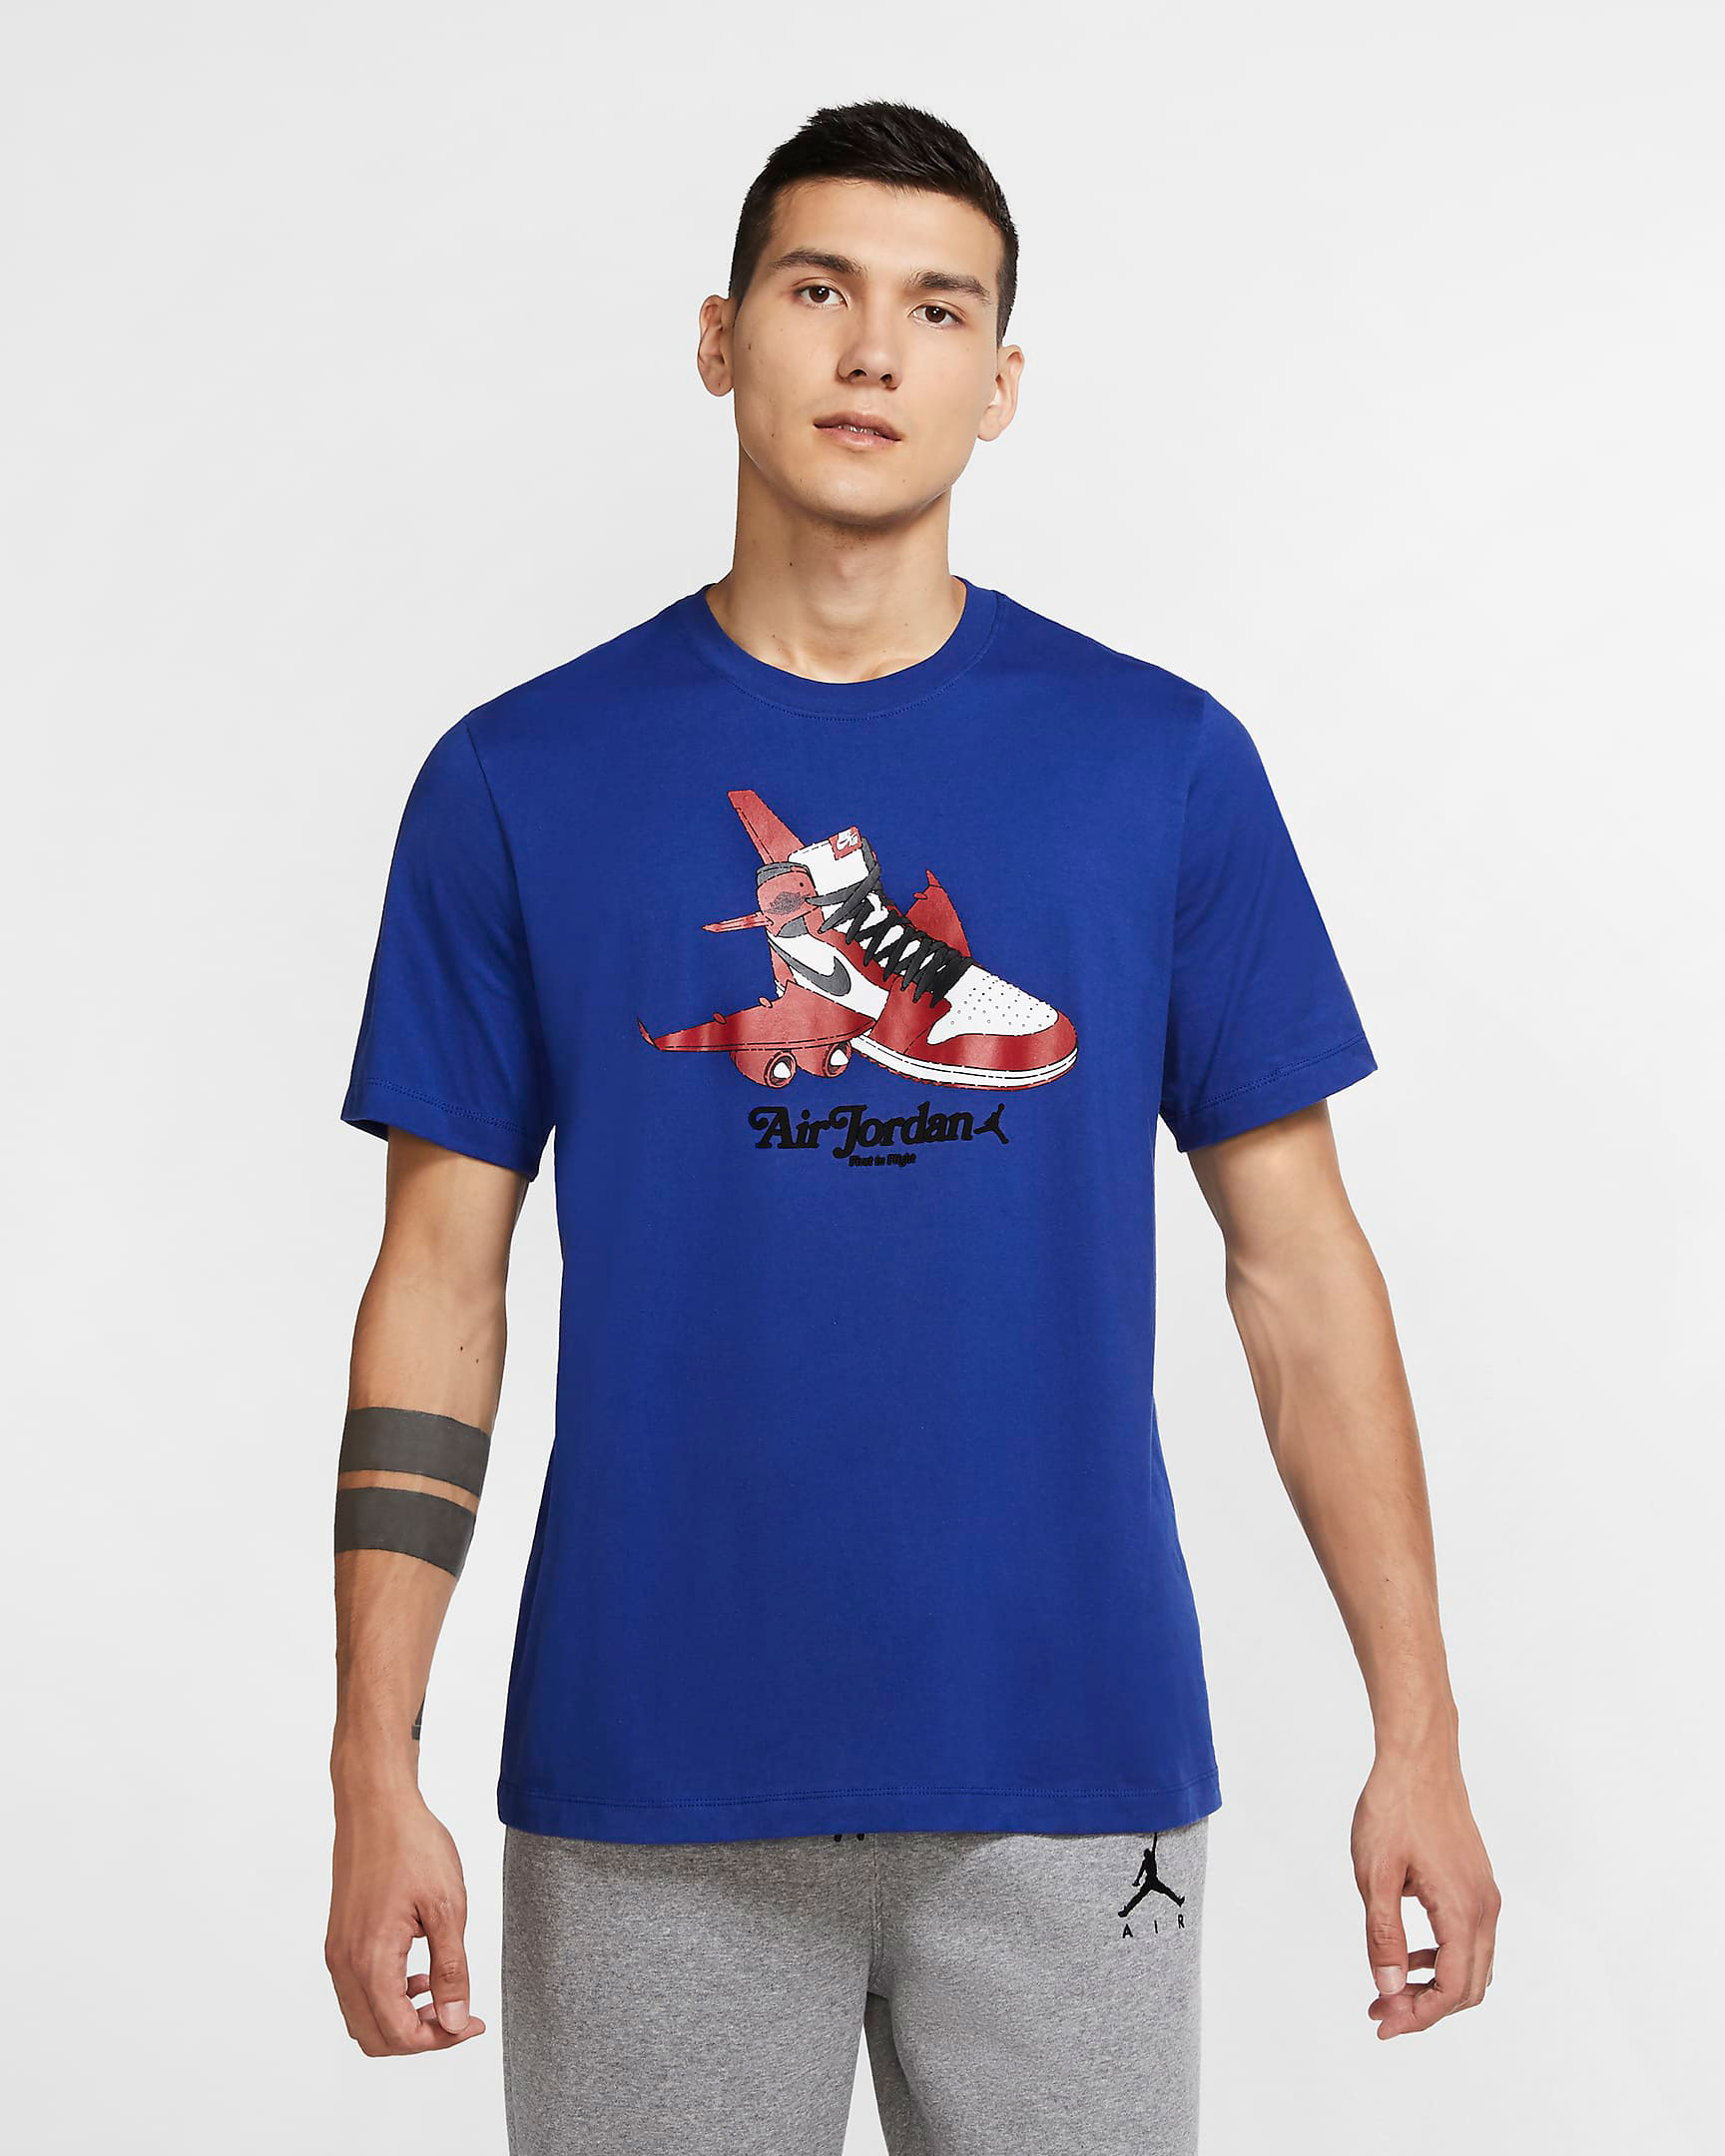 Air Jordan 14 Hyper Royal Shirts to Match | SneakerFits.com